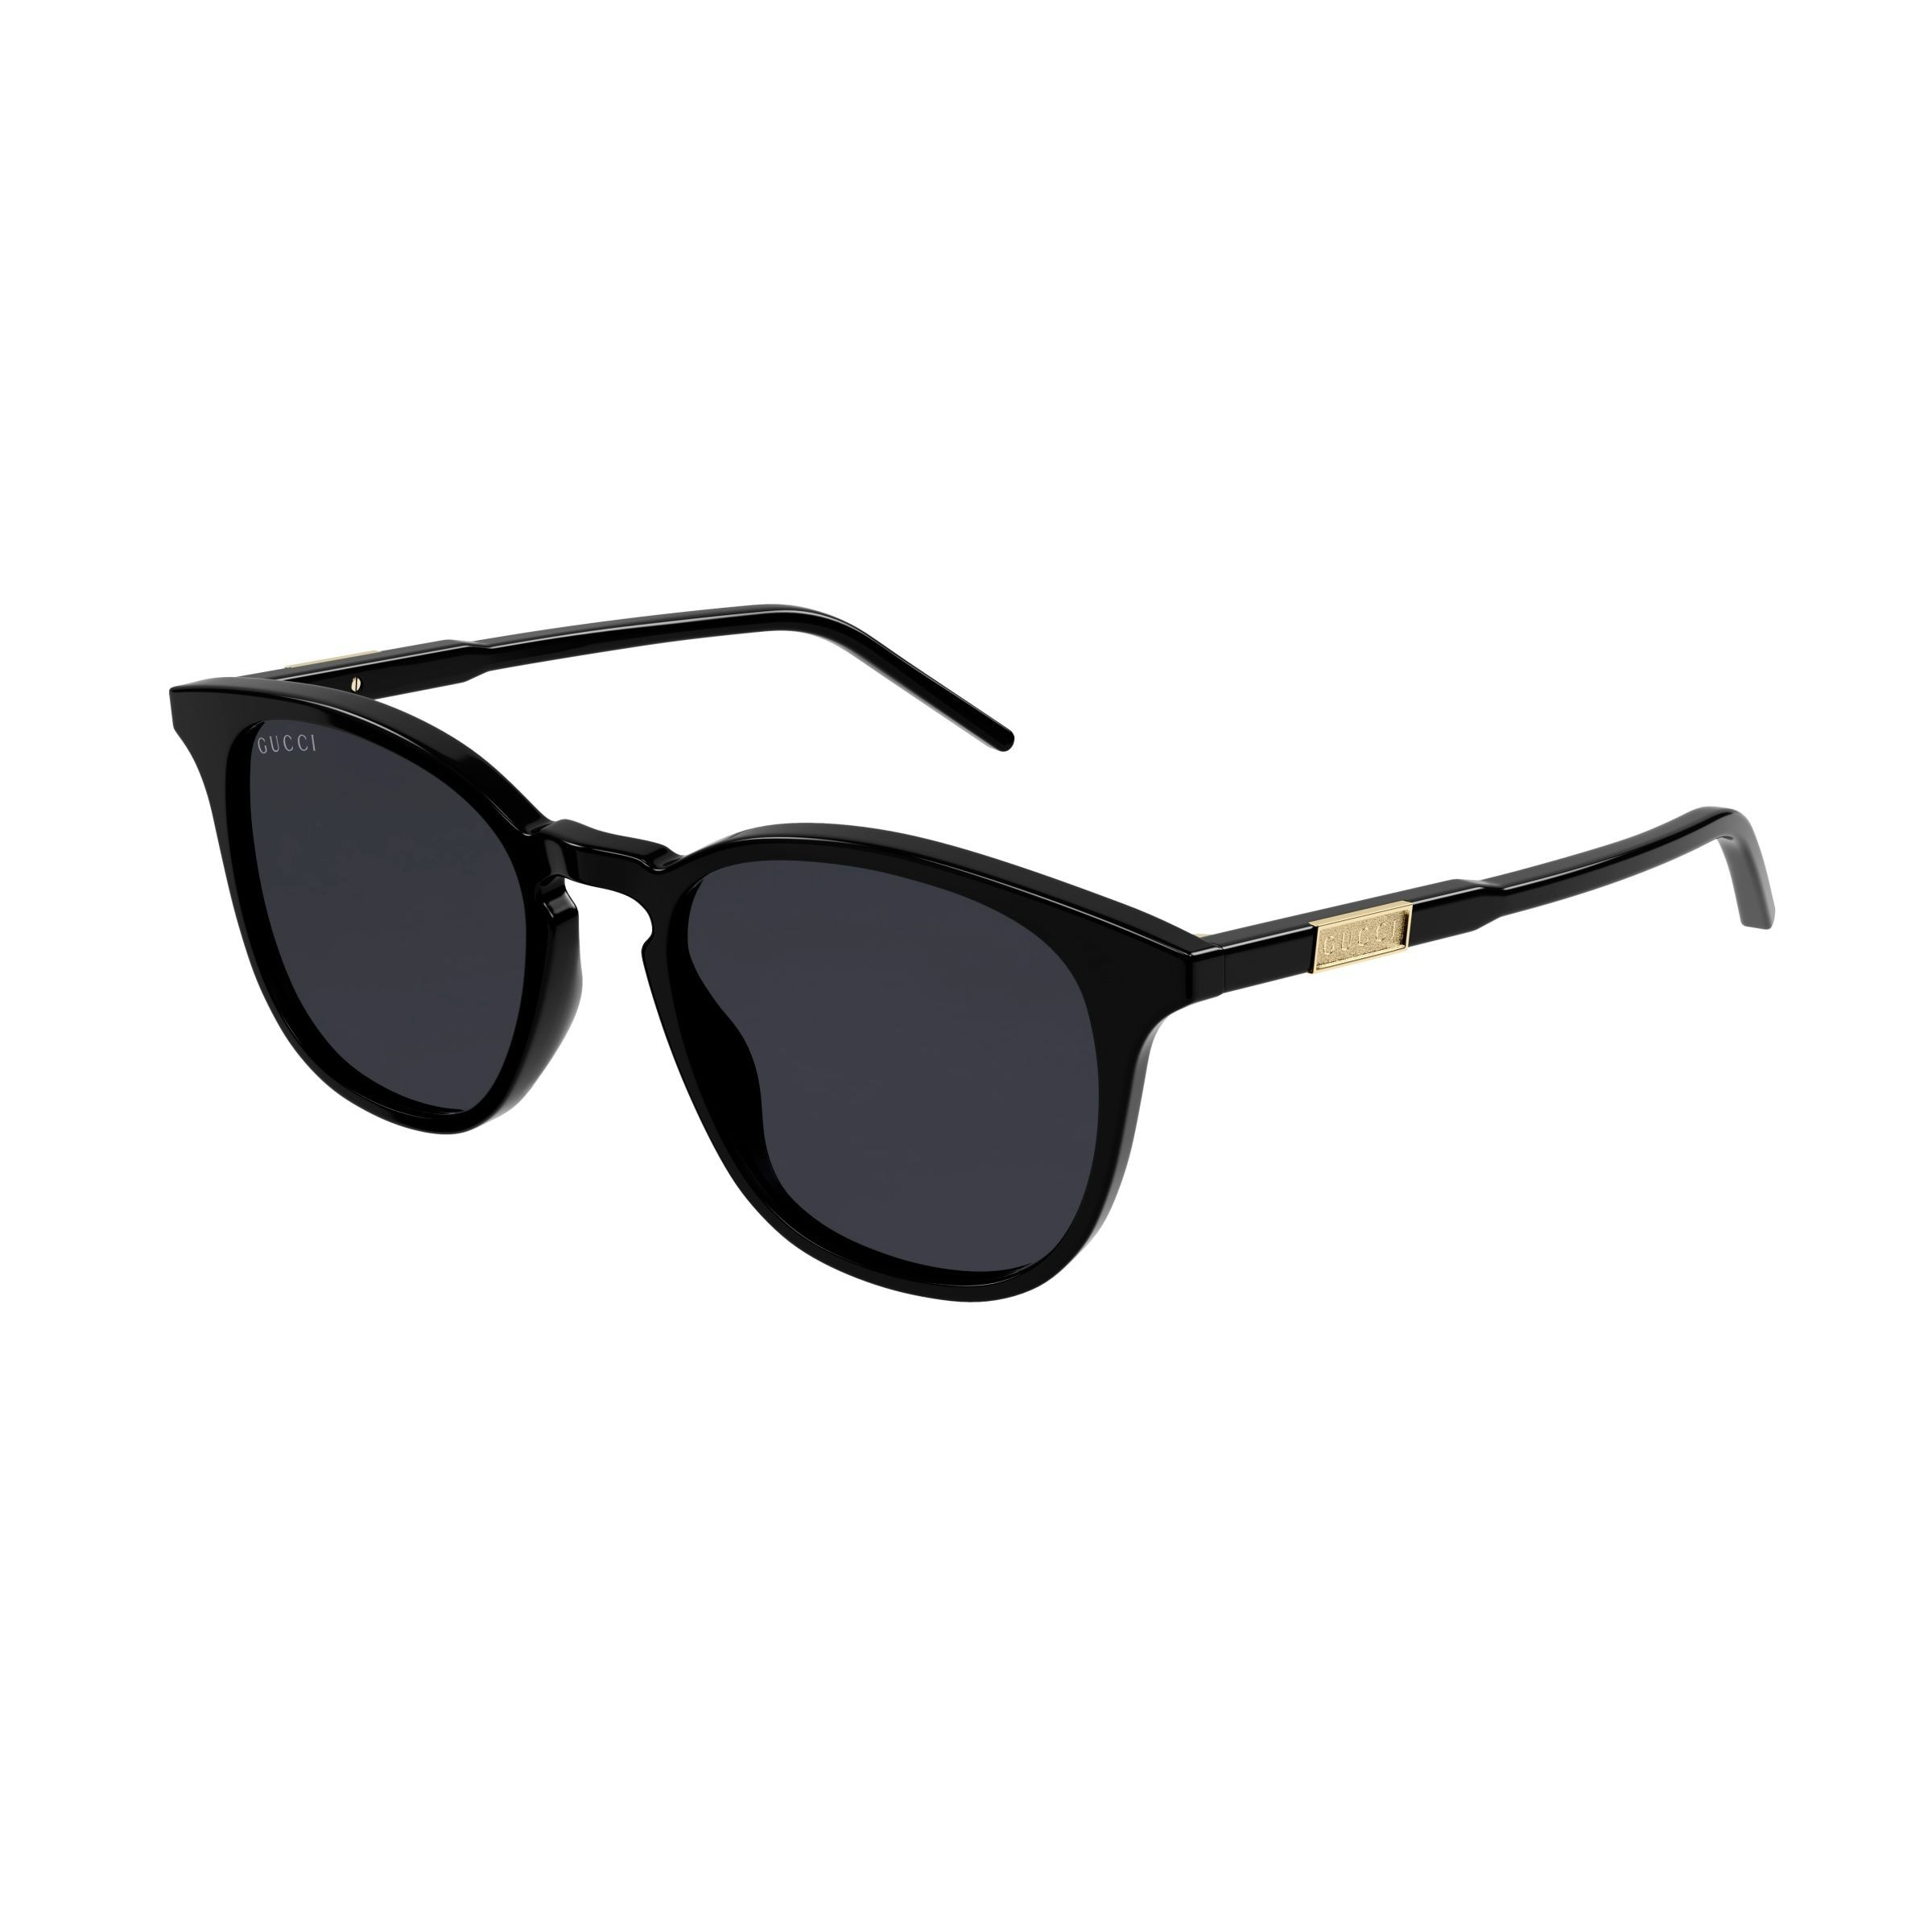 GG1157S Panthos Sunglasses 1 - size 50